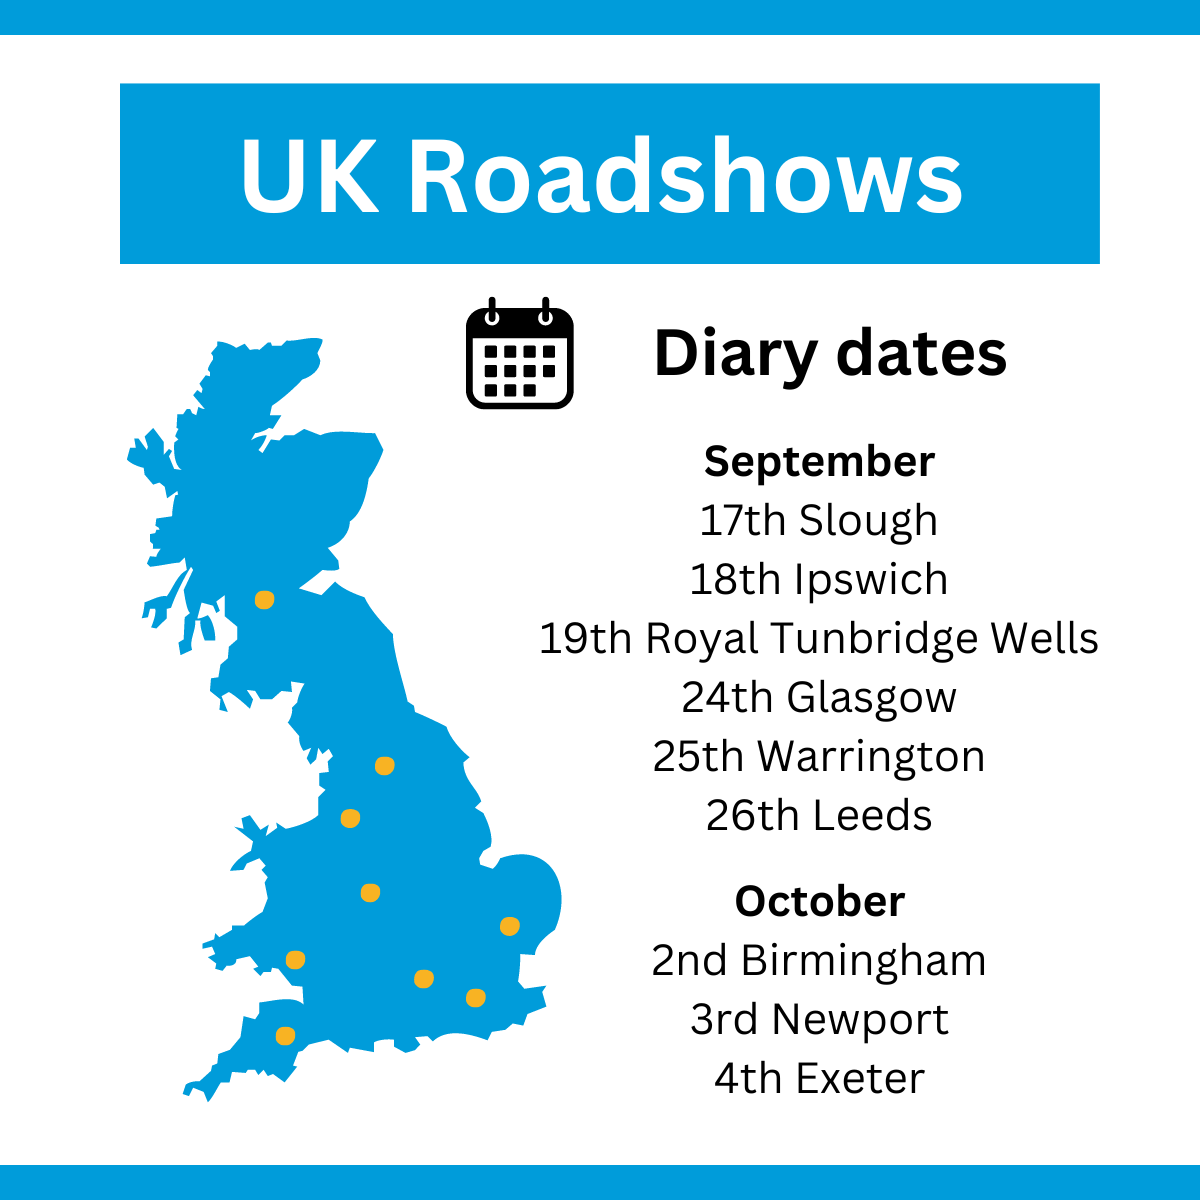 Climalife UK Roadshow dates and locations